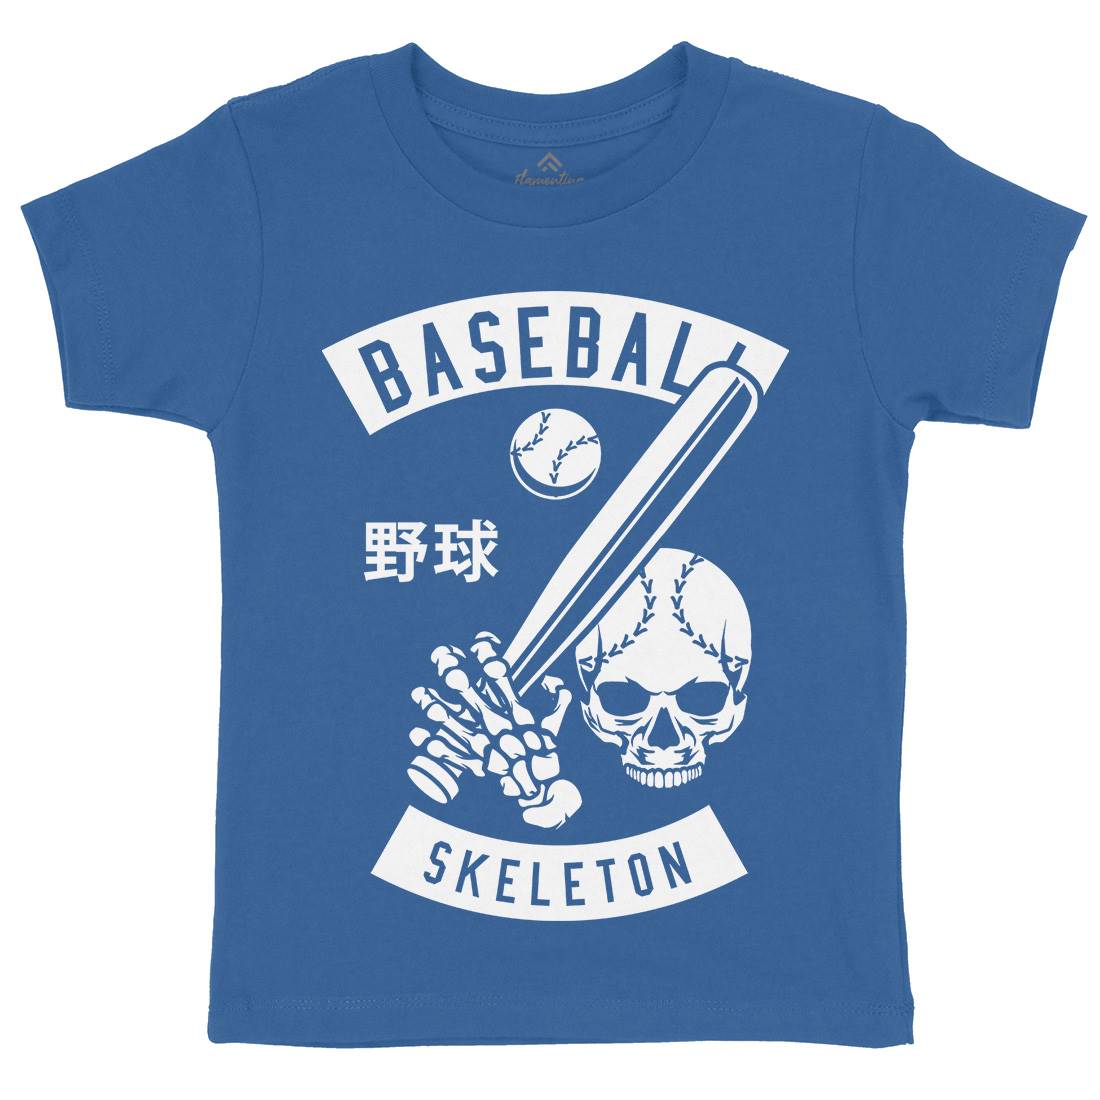 Baseball Skeleton Kids Organic Crew Neck T-Shirt Sport B489